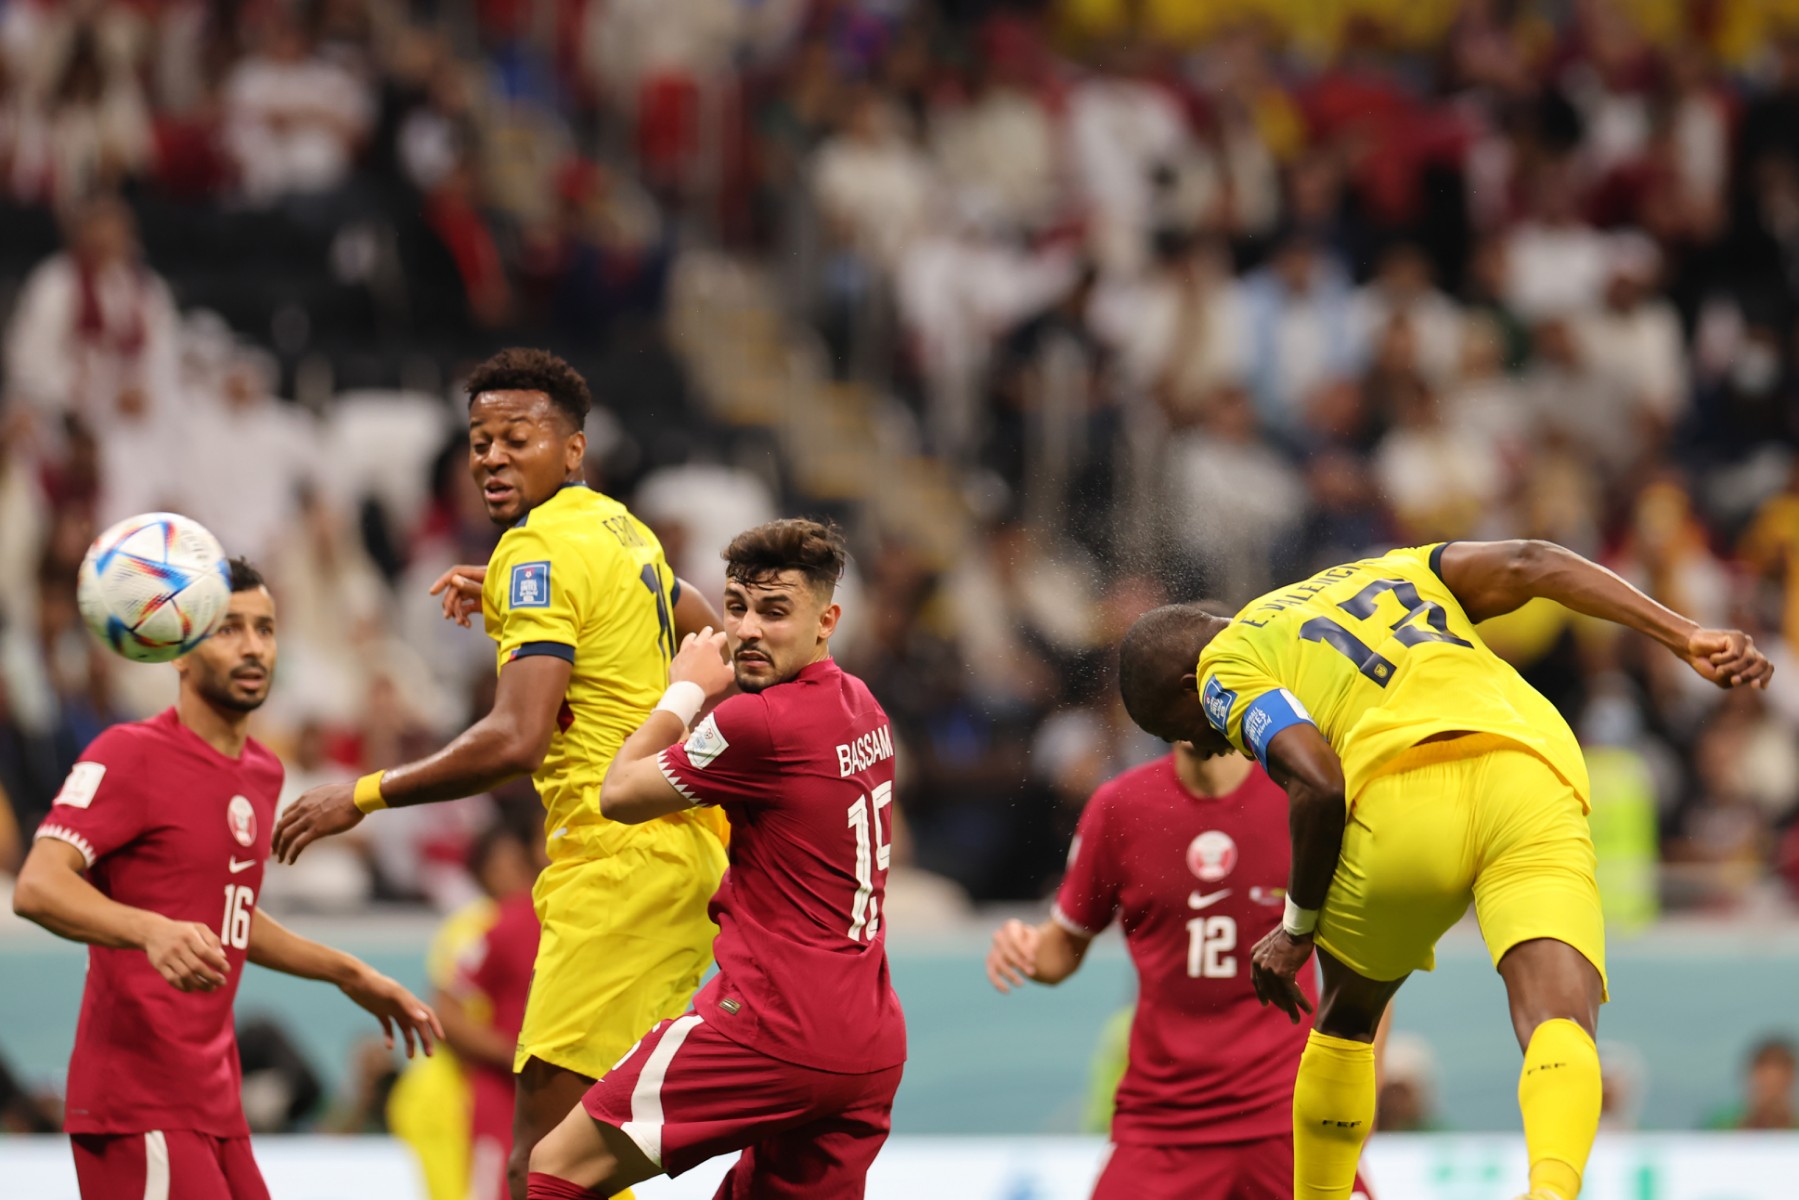 Ecuador's forward, Enner Valencia (R) scores his team's second goal during the Qatar 2022 World Cup Group A football match between Qatar and Ecuador at the Al-Bayt Stadium in Al Khor, north of Doha on November 20, 2022. (Photo by KARIM JAAFAR / AFP)